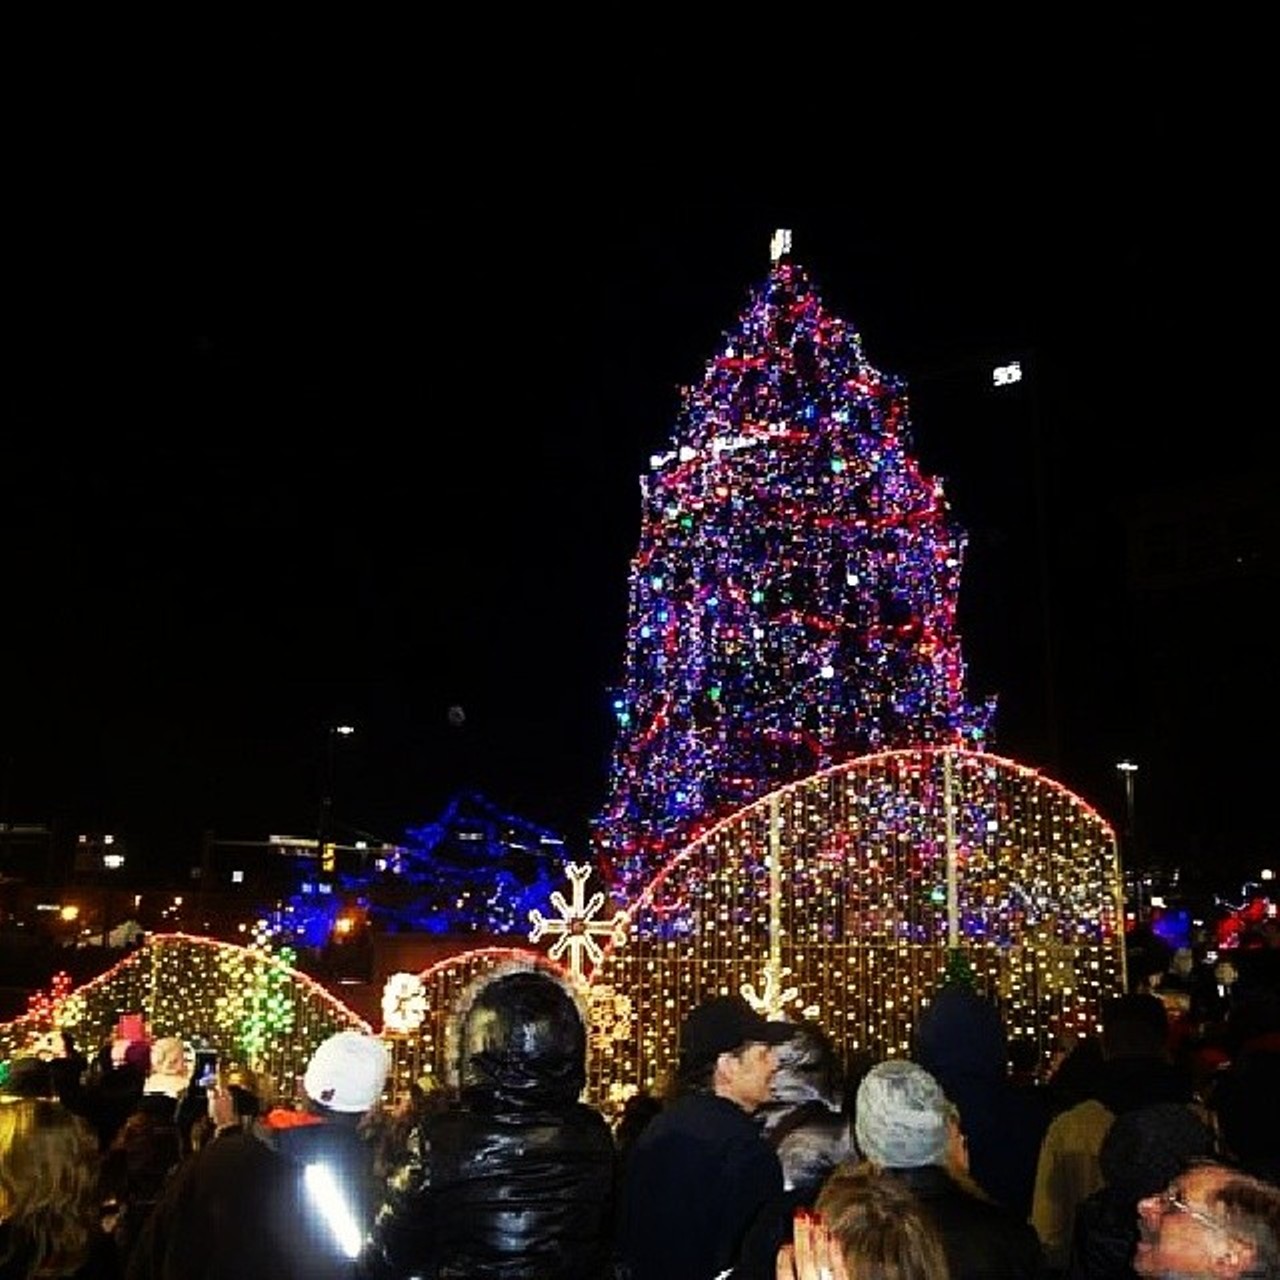 #winterfest #winterfest2013 #lights #tree #christmas #Cleveland